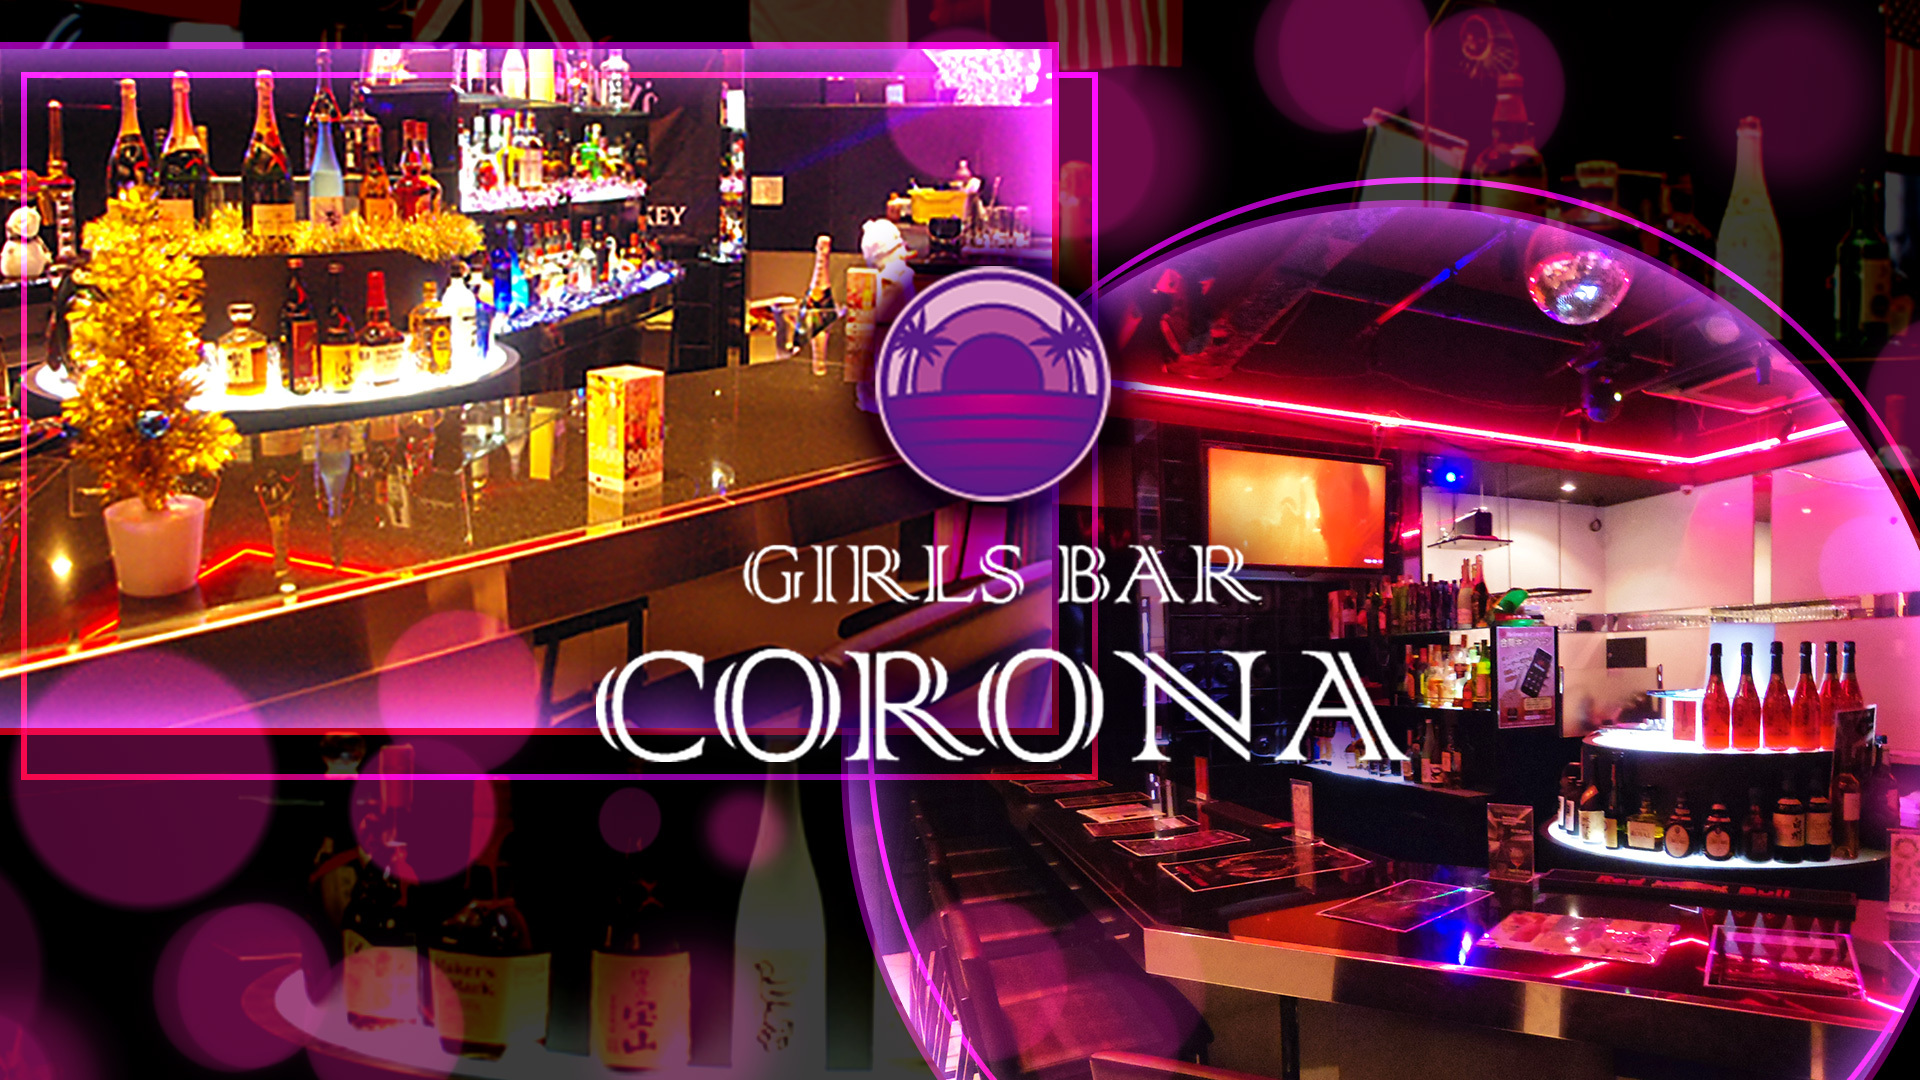 Girls Bar Corona コロナ 福岡市博多区中洲 ガールズバー ナイトスタイル